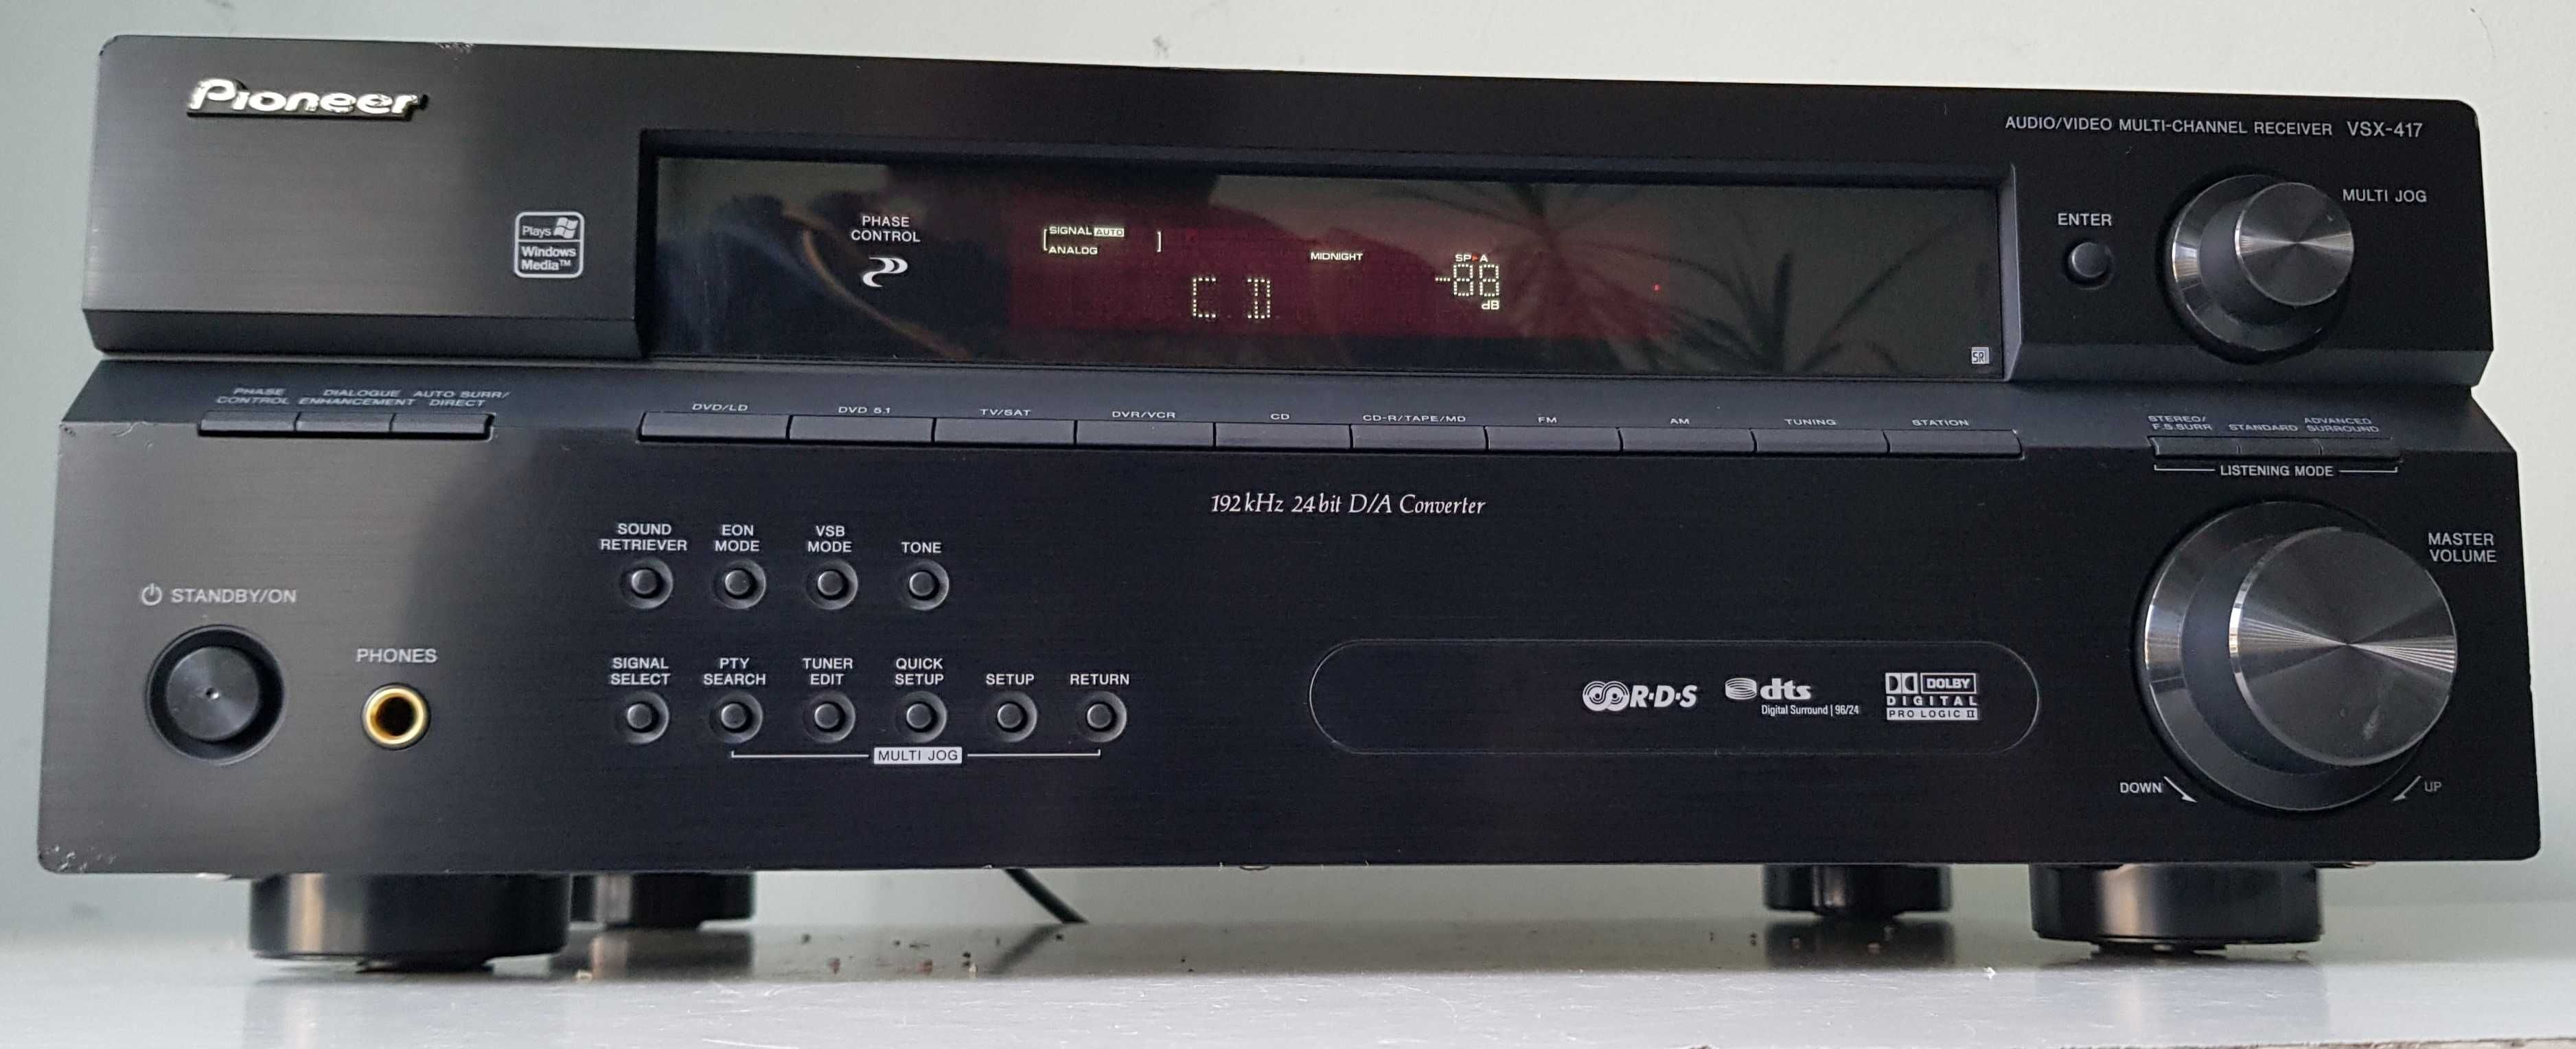 Pioneer VSX 417 amplif 5.1 receiver filme sufragerie casa arta